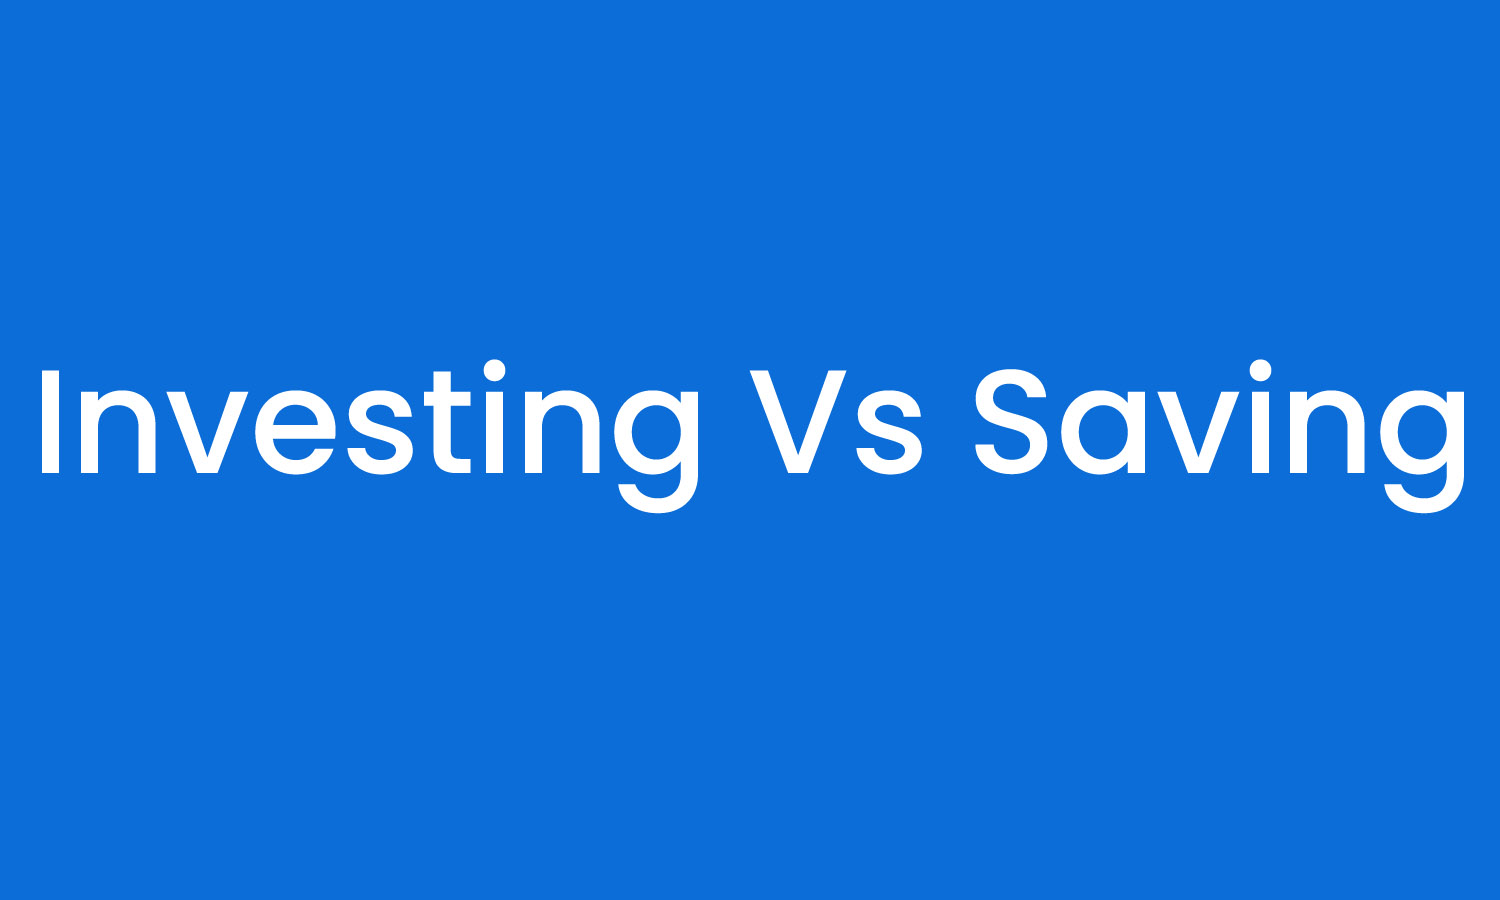 Investing and Saving